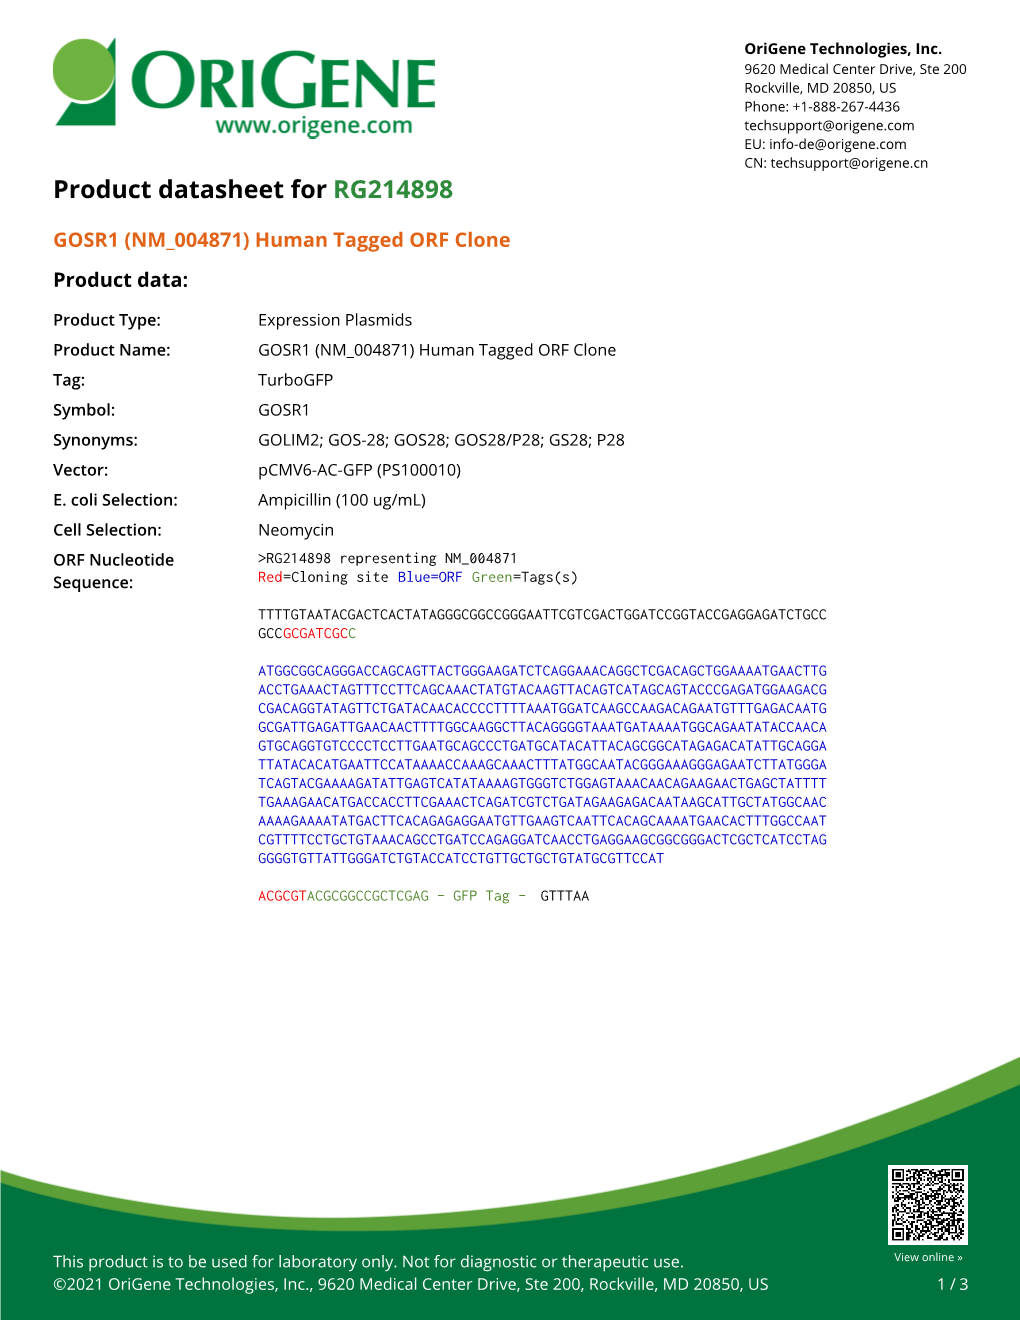 GOSR1 (NM 004871) Human Tagged ORF Clone – RG214898